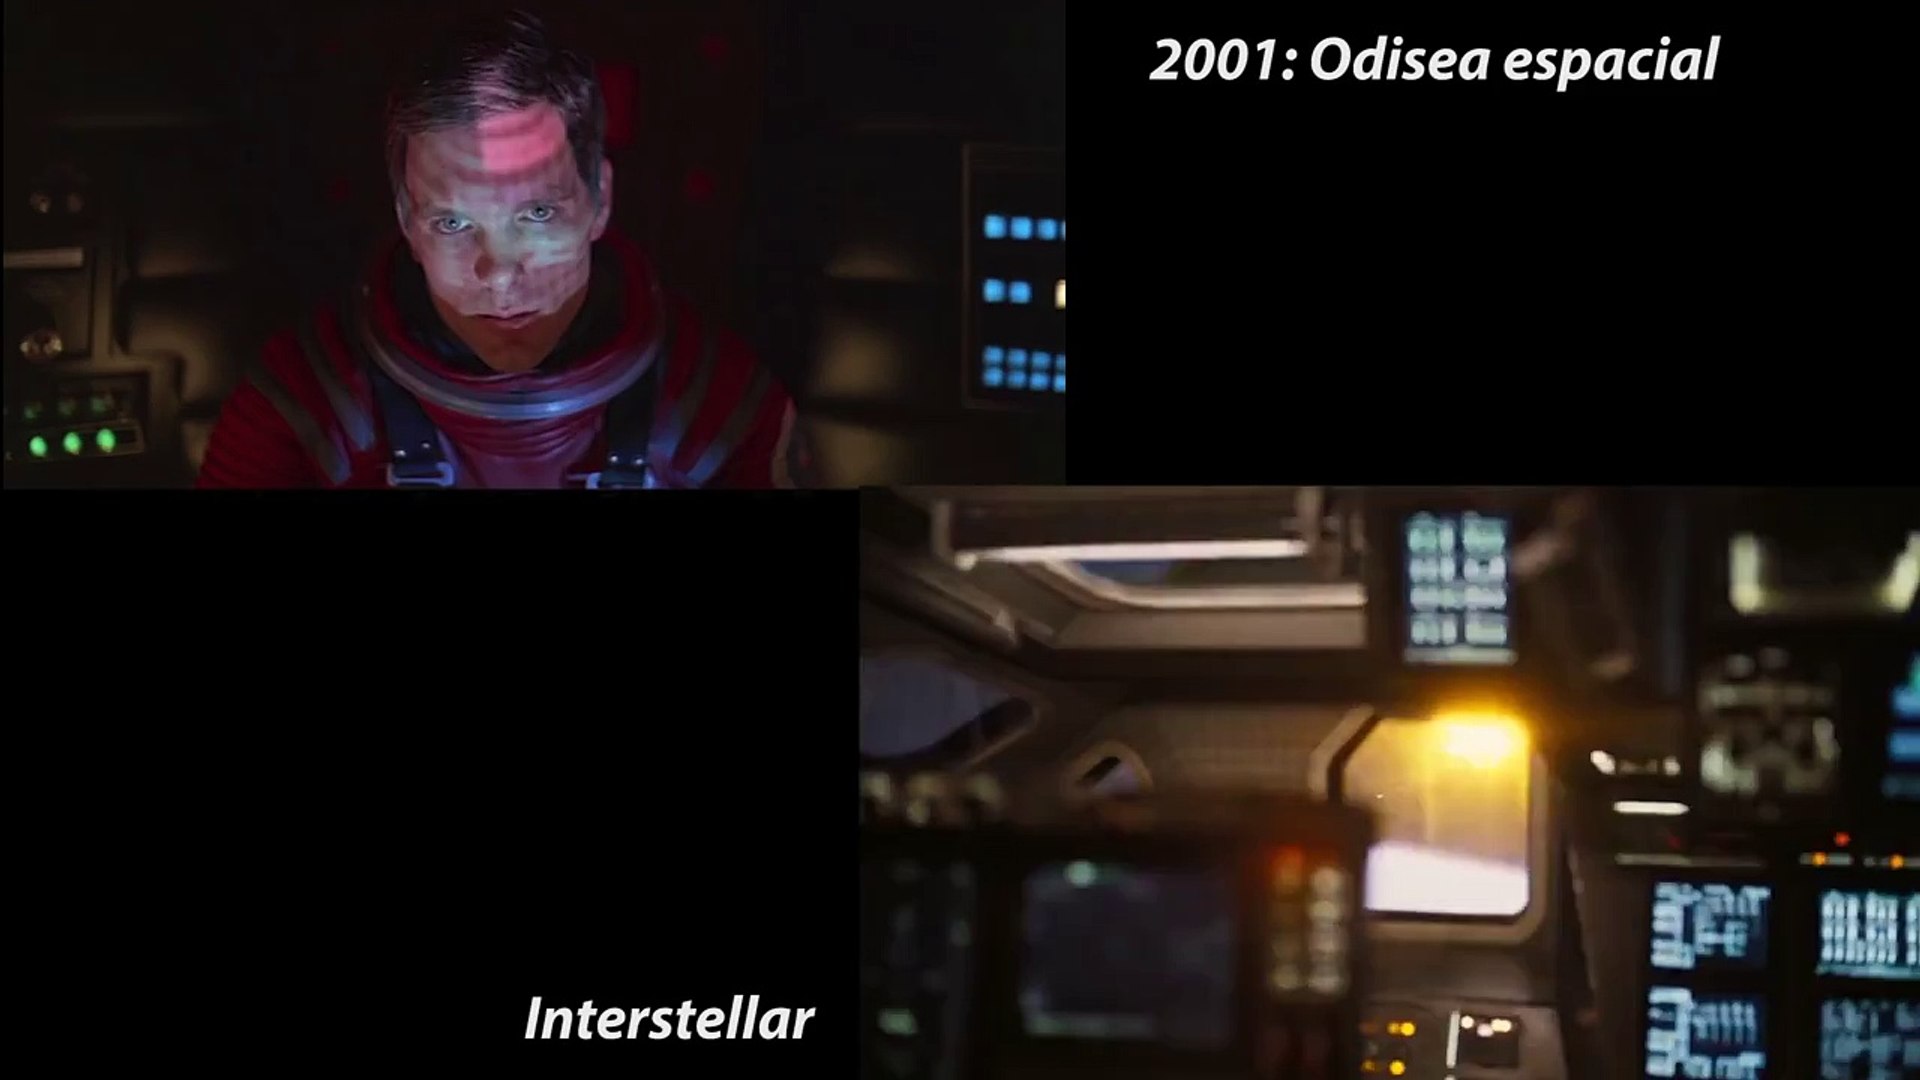 Interstellar tribute to 2001: Space odyssey - Docking scene